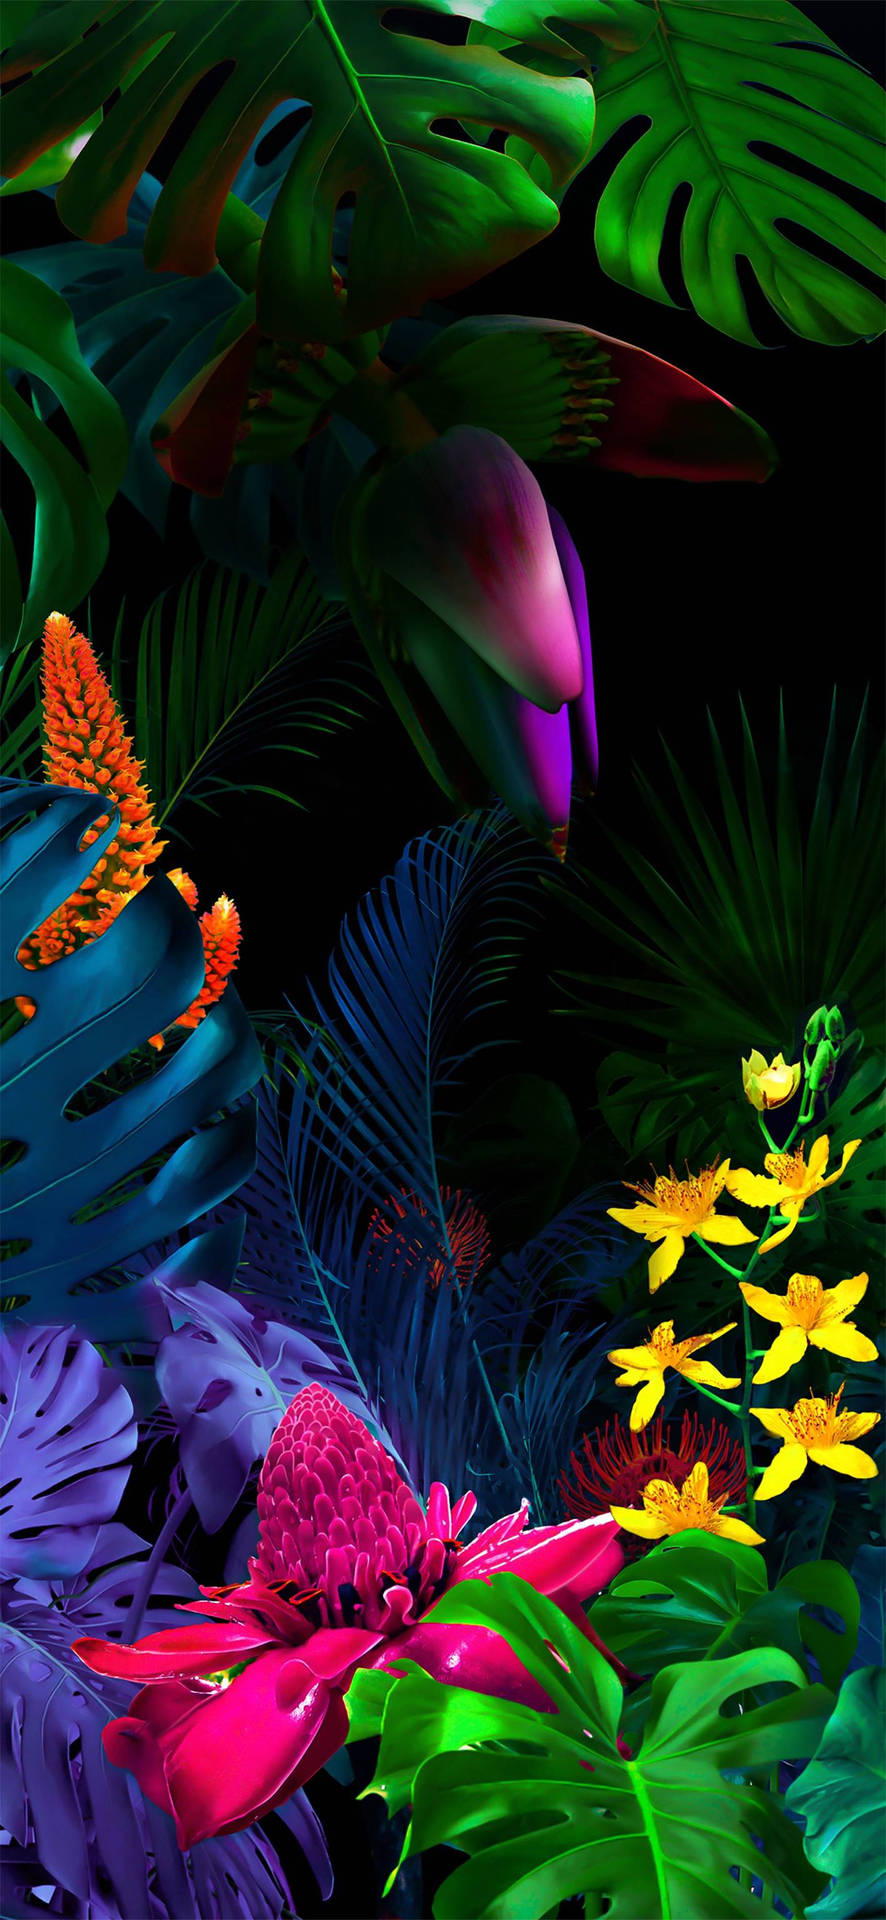 Dark Tropical Illustration iPhone Wallpaper